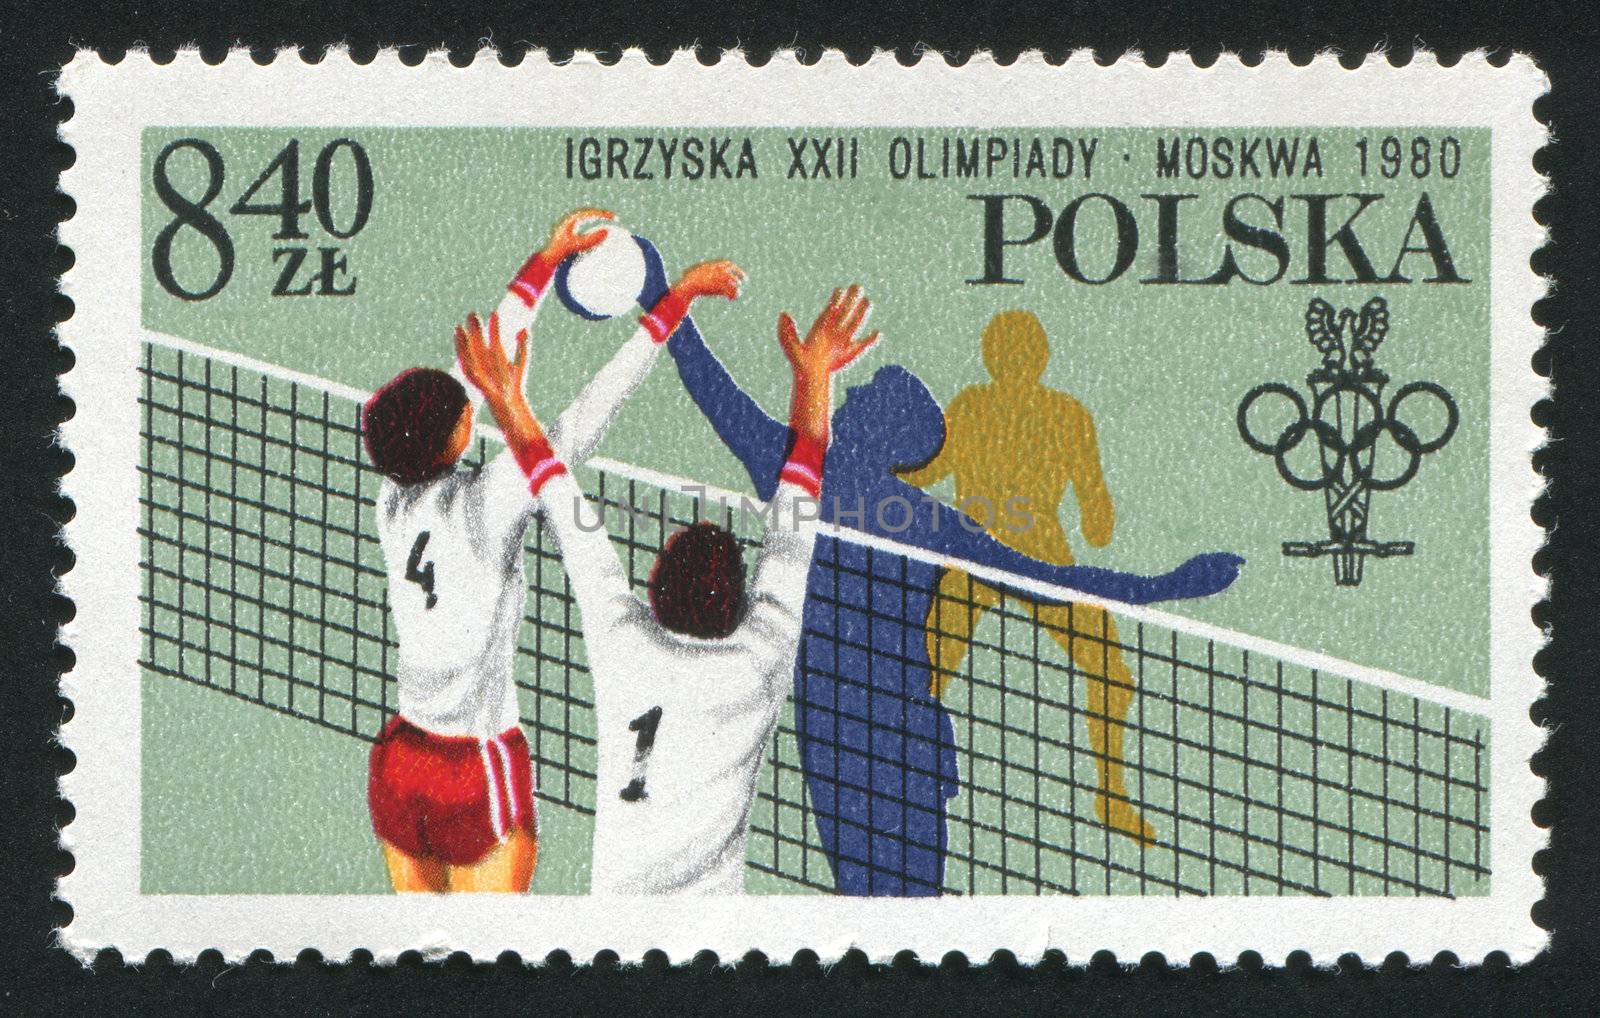 POLAND -CIRCA 1980: 22 nd Summer Olympic Games, Moscow. Volleyball, circa 1980.